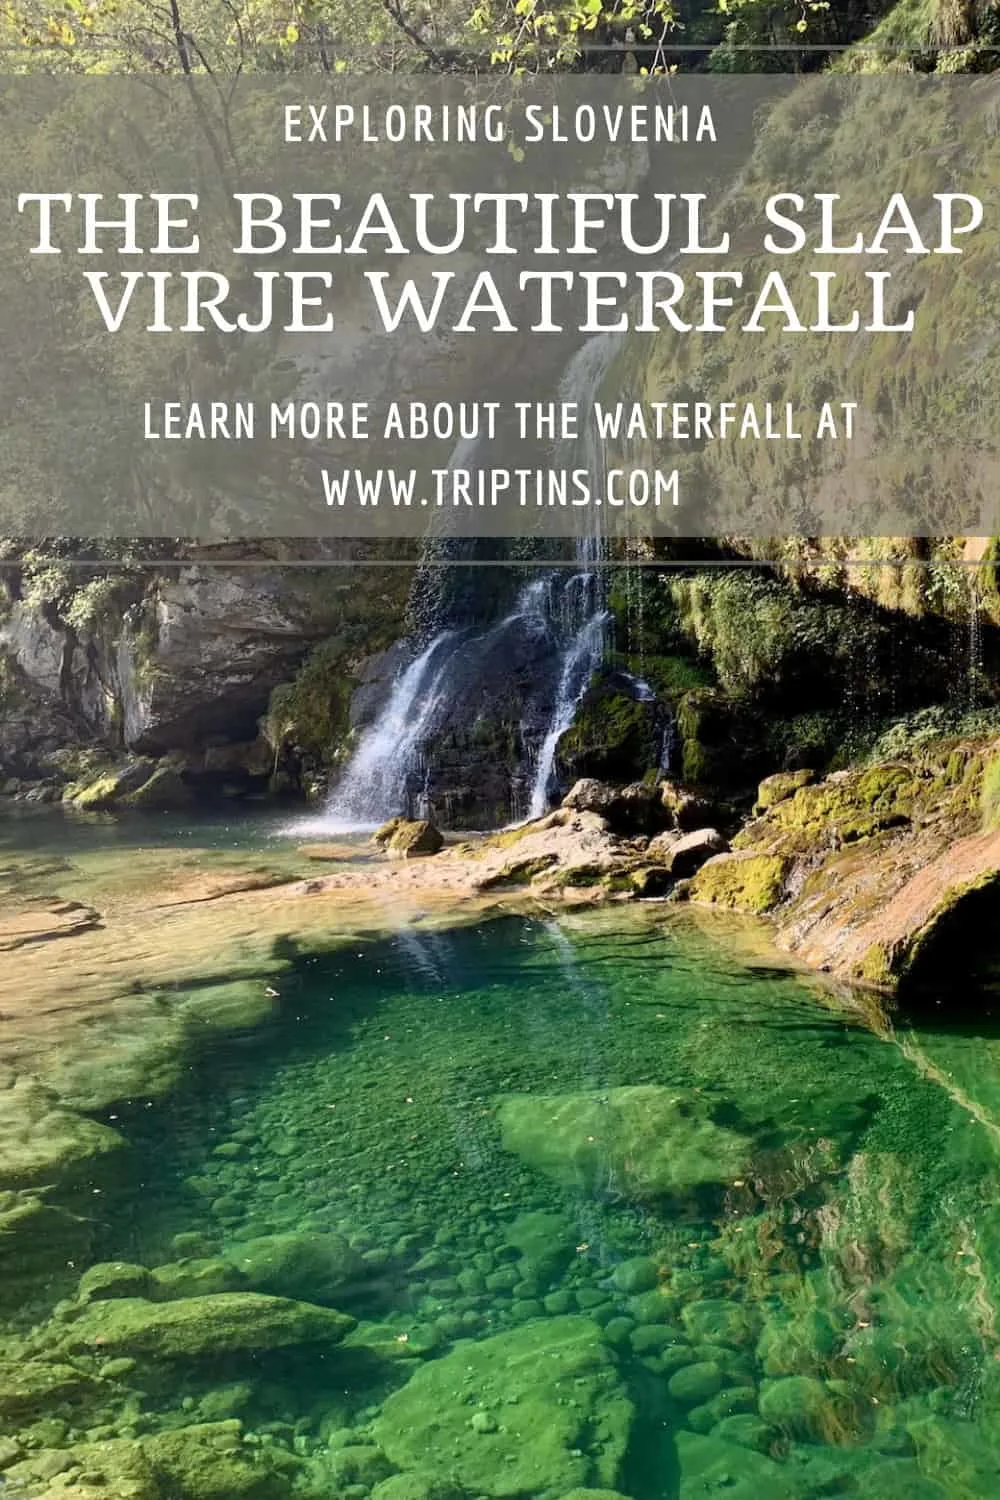 Slap Virje Waterfall Slovenia